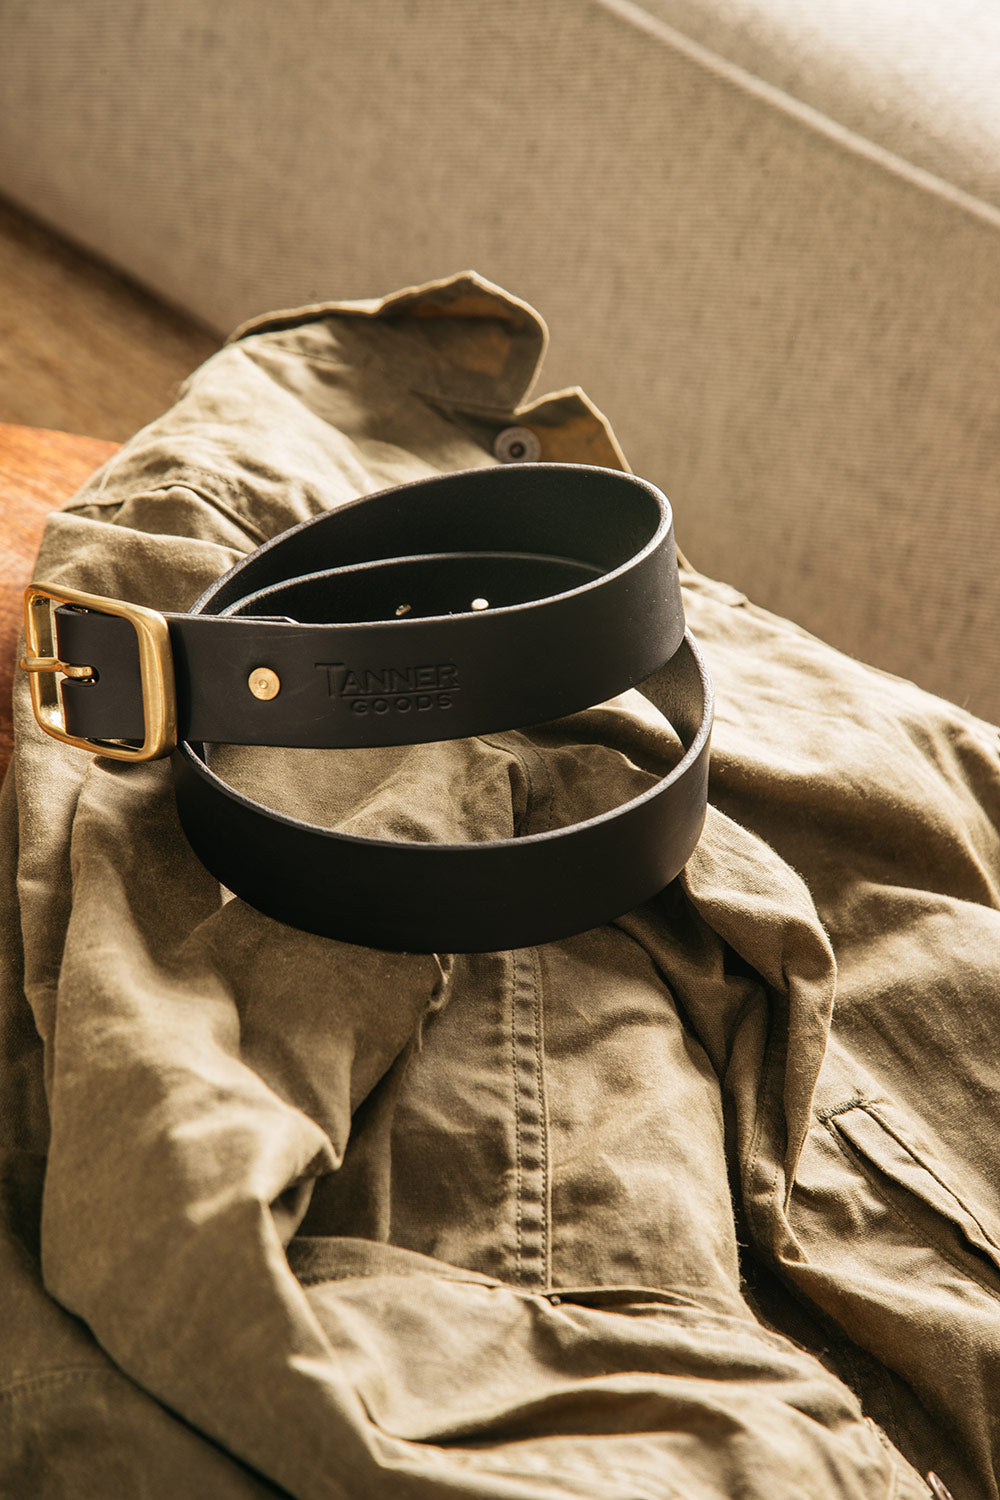 Standard Belt in | Goods Black Made - USA Tanner | the